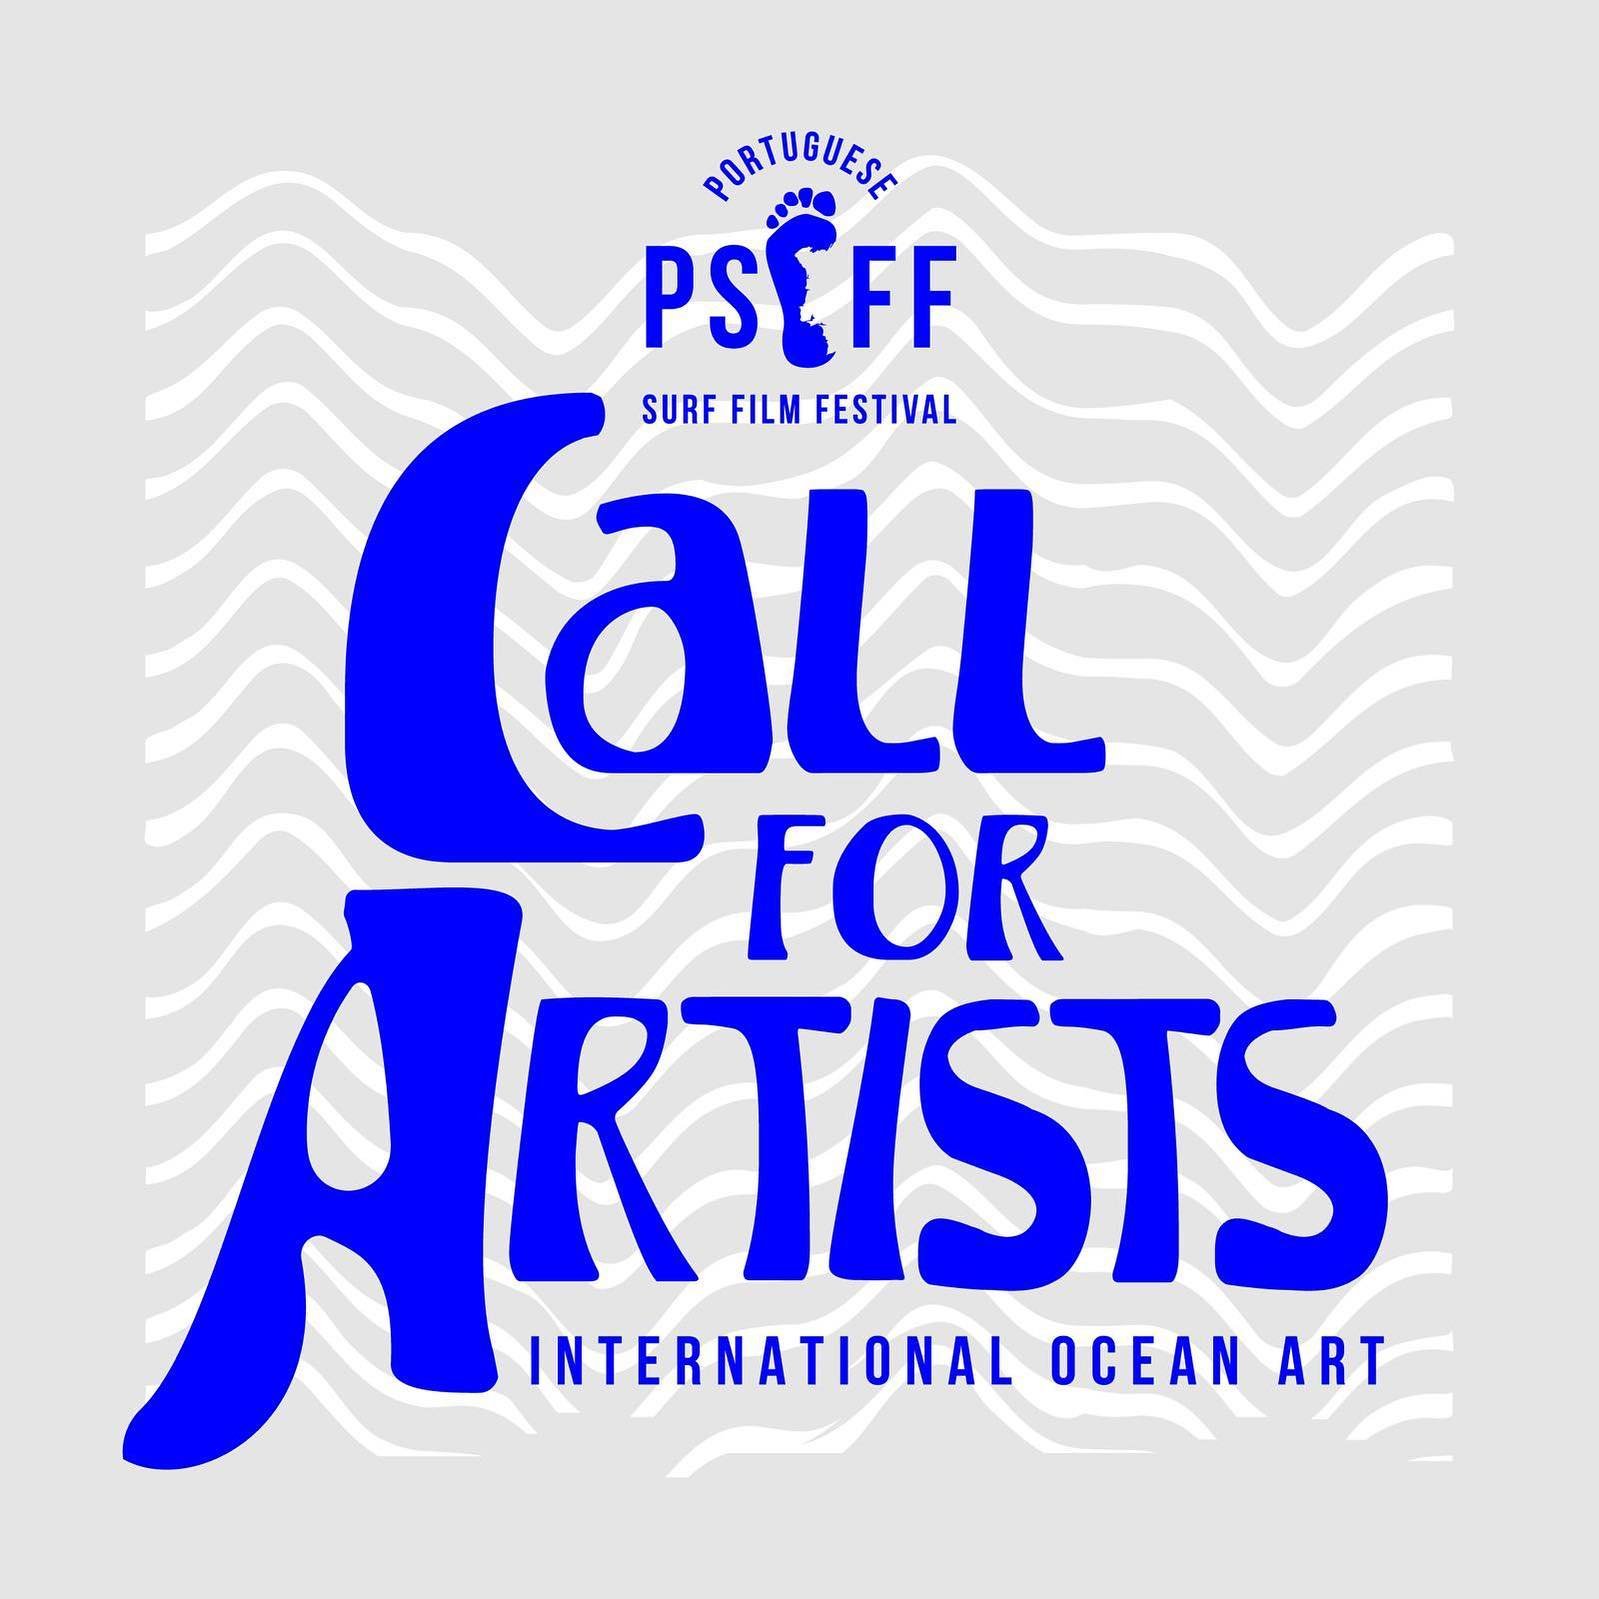 Call for artists until 10 June! 
Click on the link in our bio to apply 🤙🏼

Convite para os artistas aberto at&eacute; 10 de junho! 
Clique no link na nossa bio para se candidatar🤙🏼